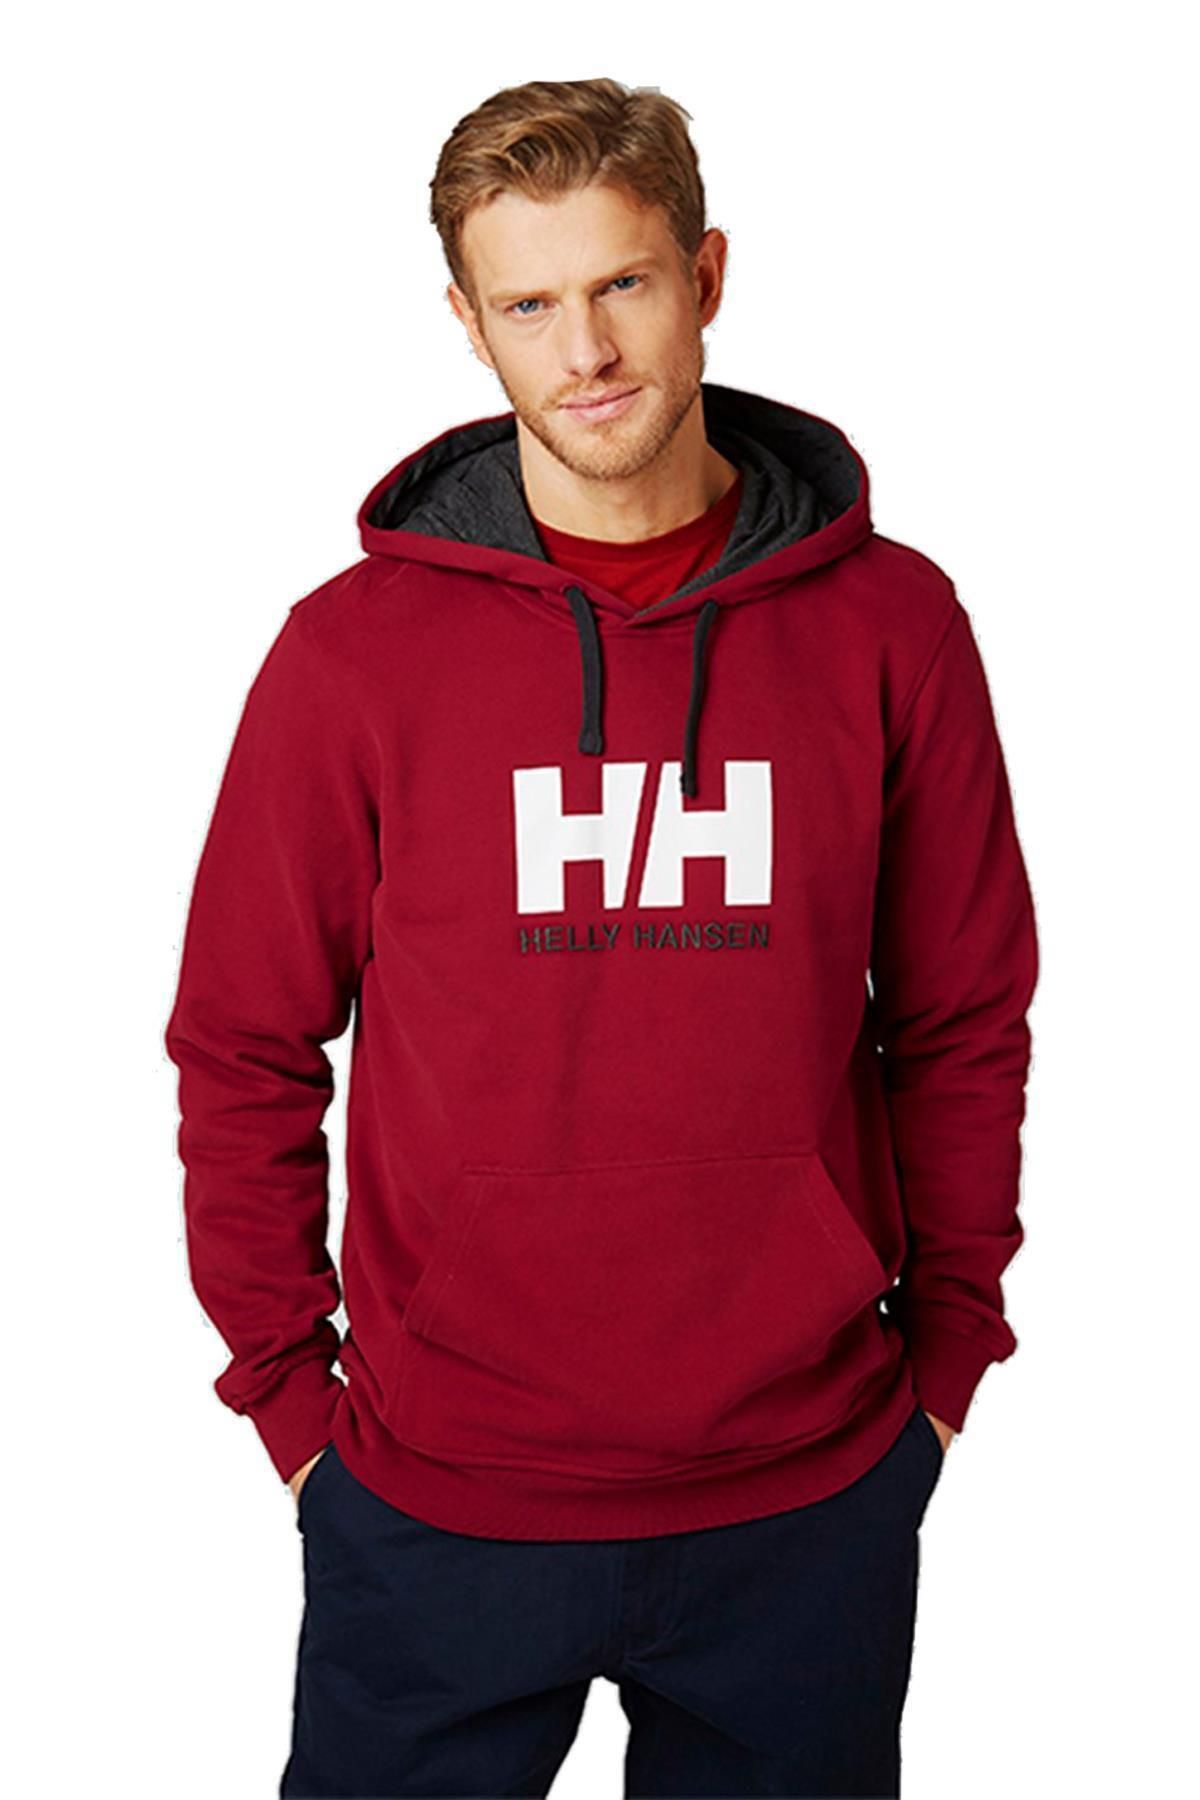 Helly Hansen Hha.33977 - Logo Hoodie Sweat Shirt